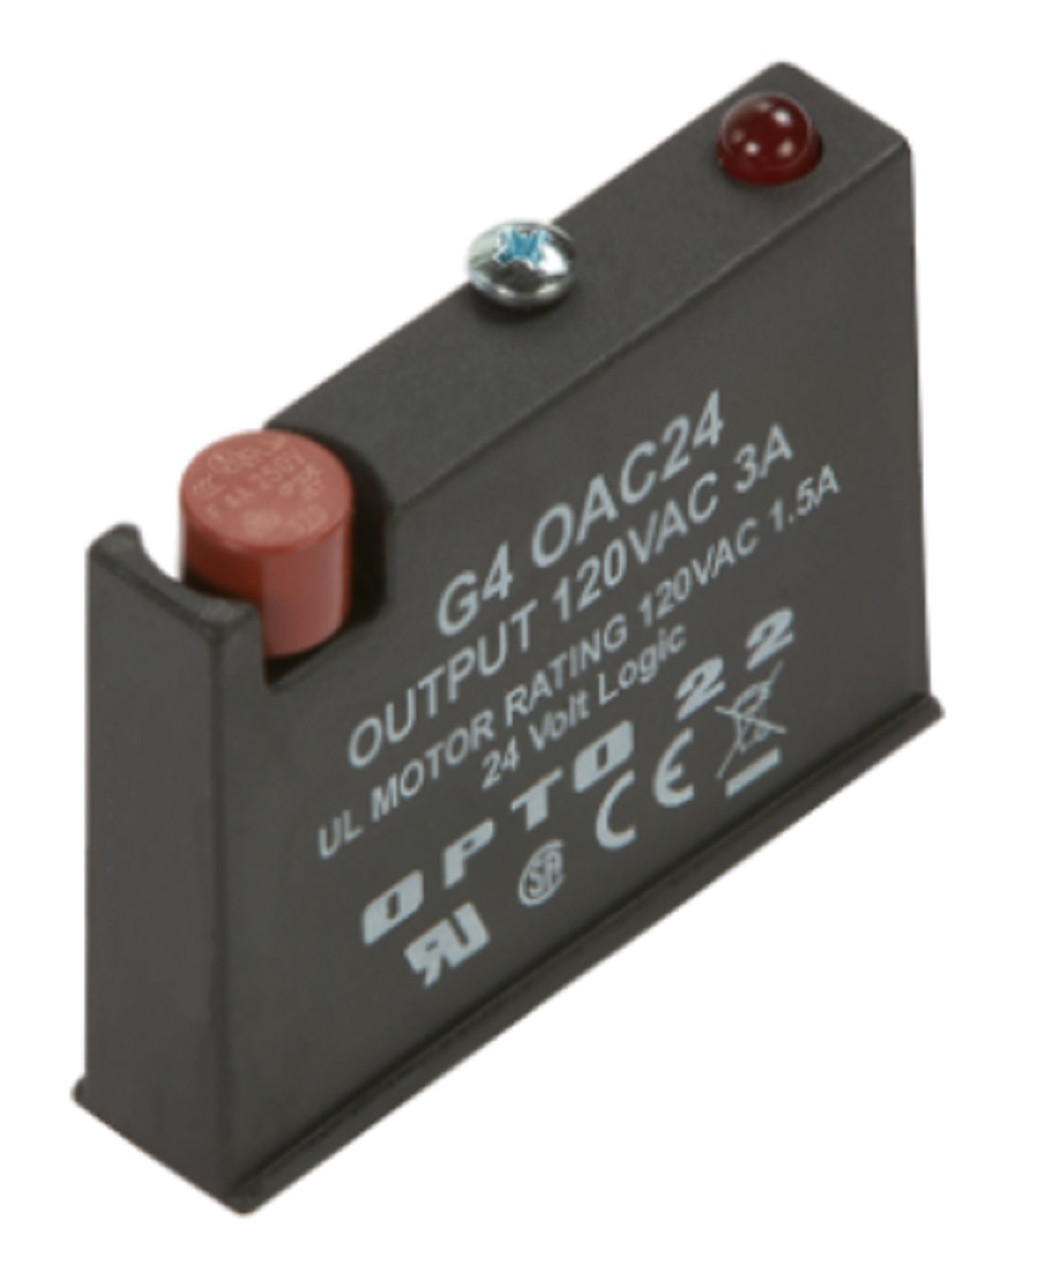 Opto 22 G4OAC24 G4 AC Output 12-140 VAC, 24 VDC Logic [Refurbished]